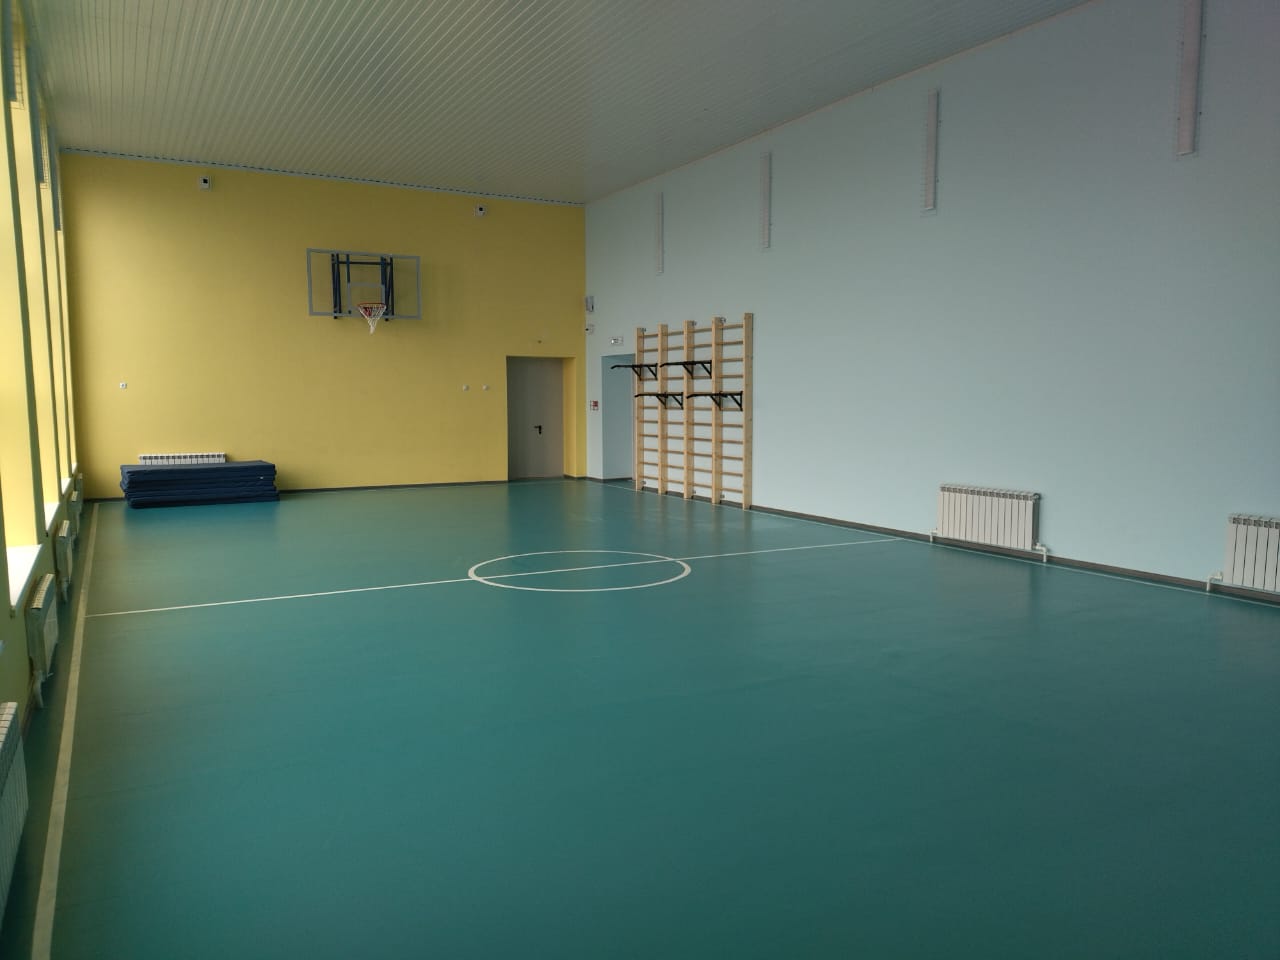 спортивный зал